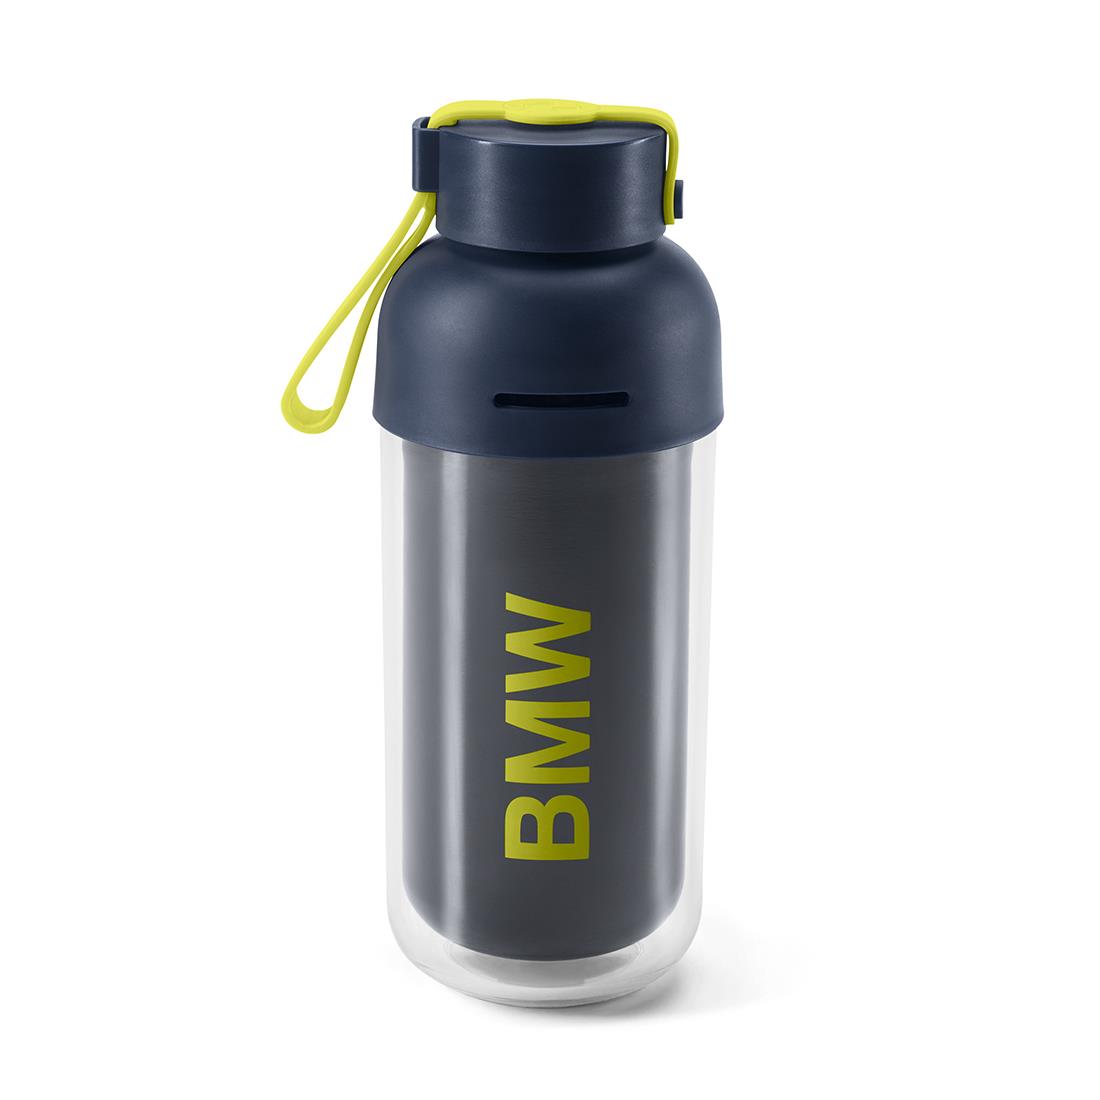 BMW Travel Mugs – Bimmerzone